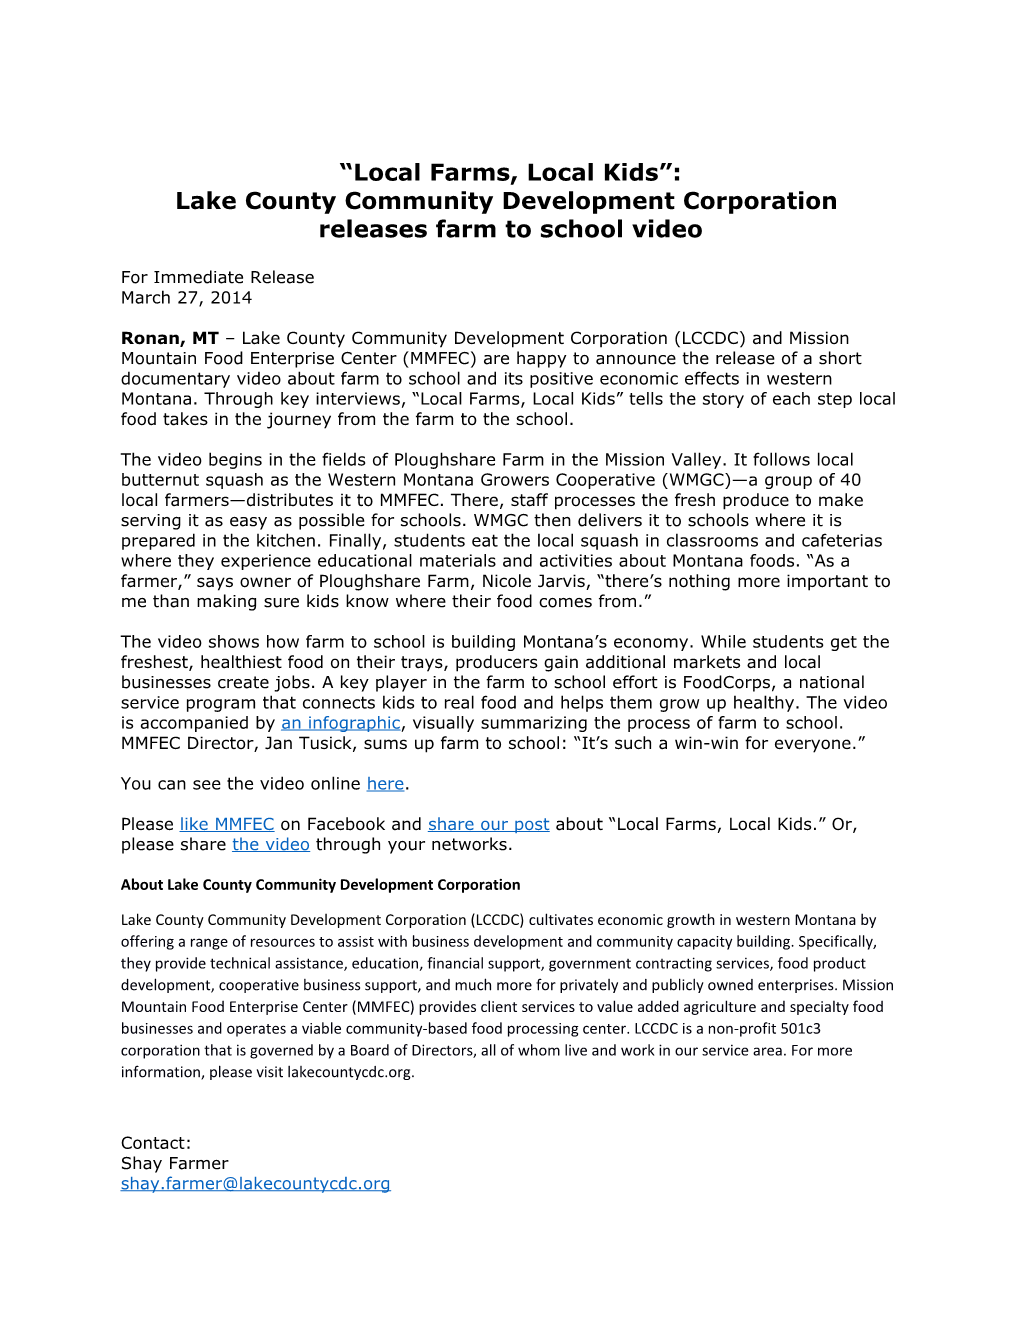 Local Farms, Local Kids : Lake County Community Development Corporation Releases Farm